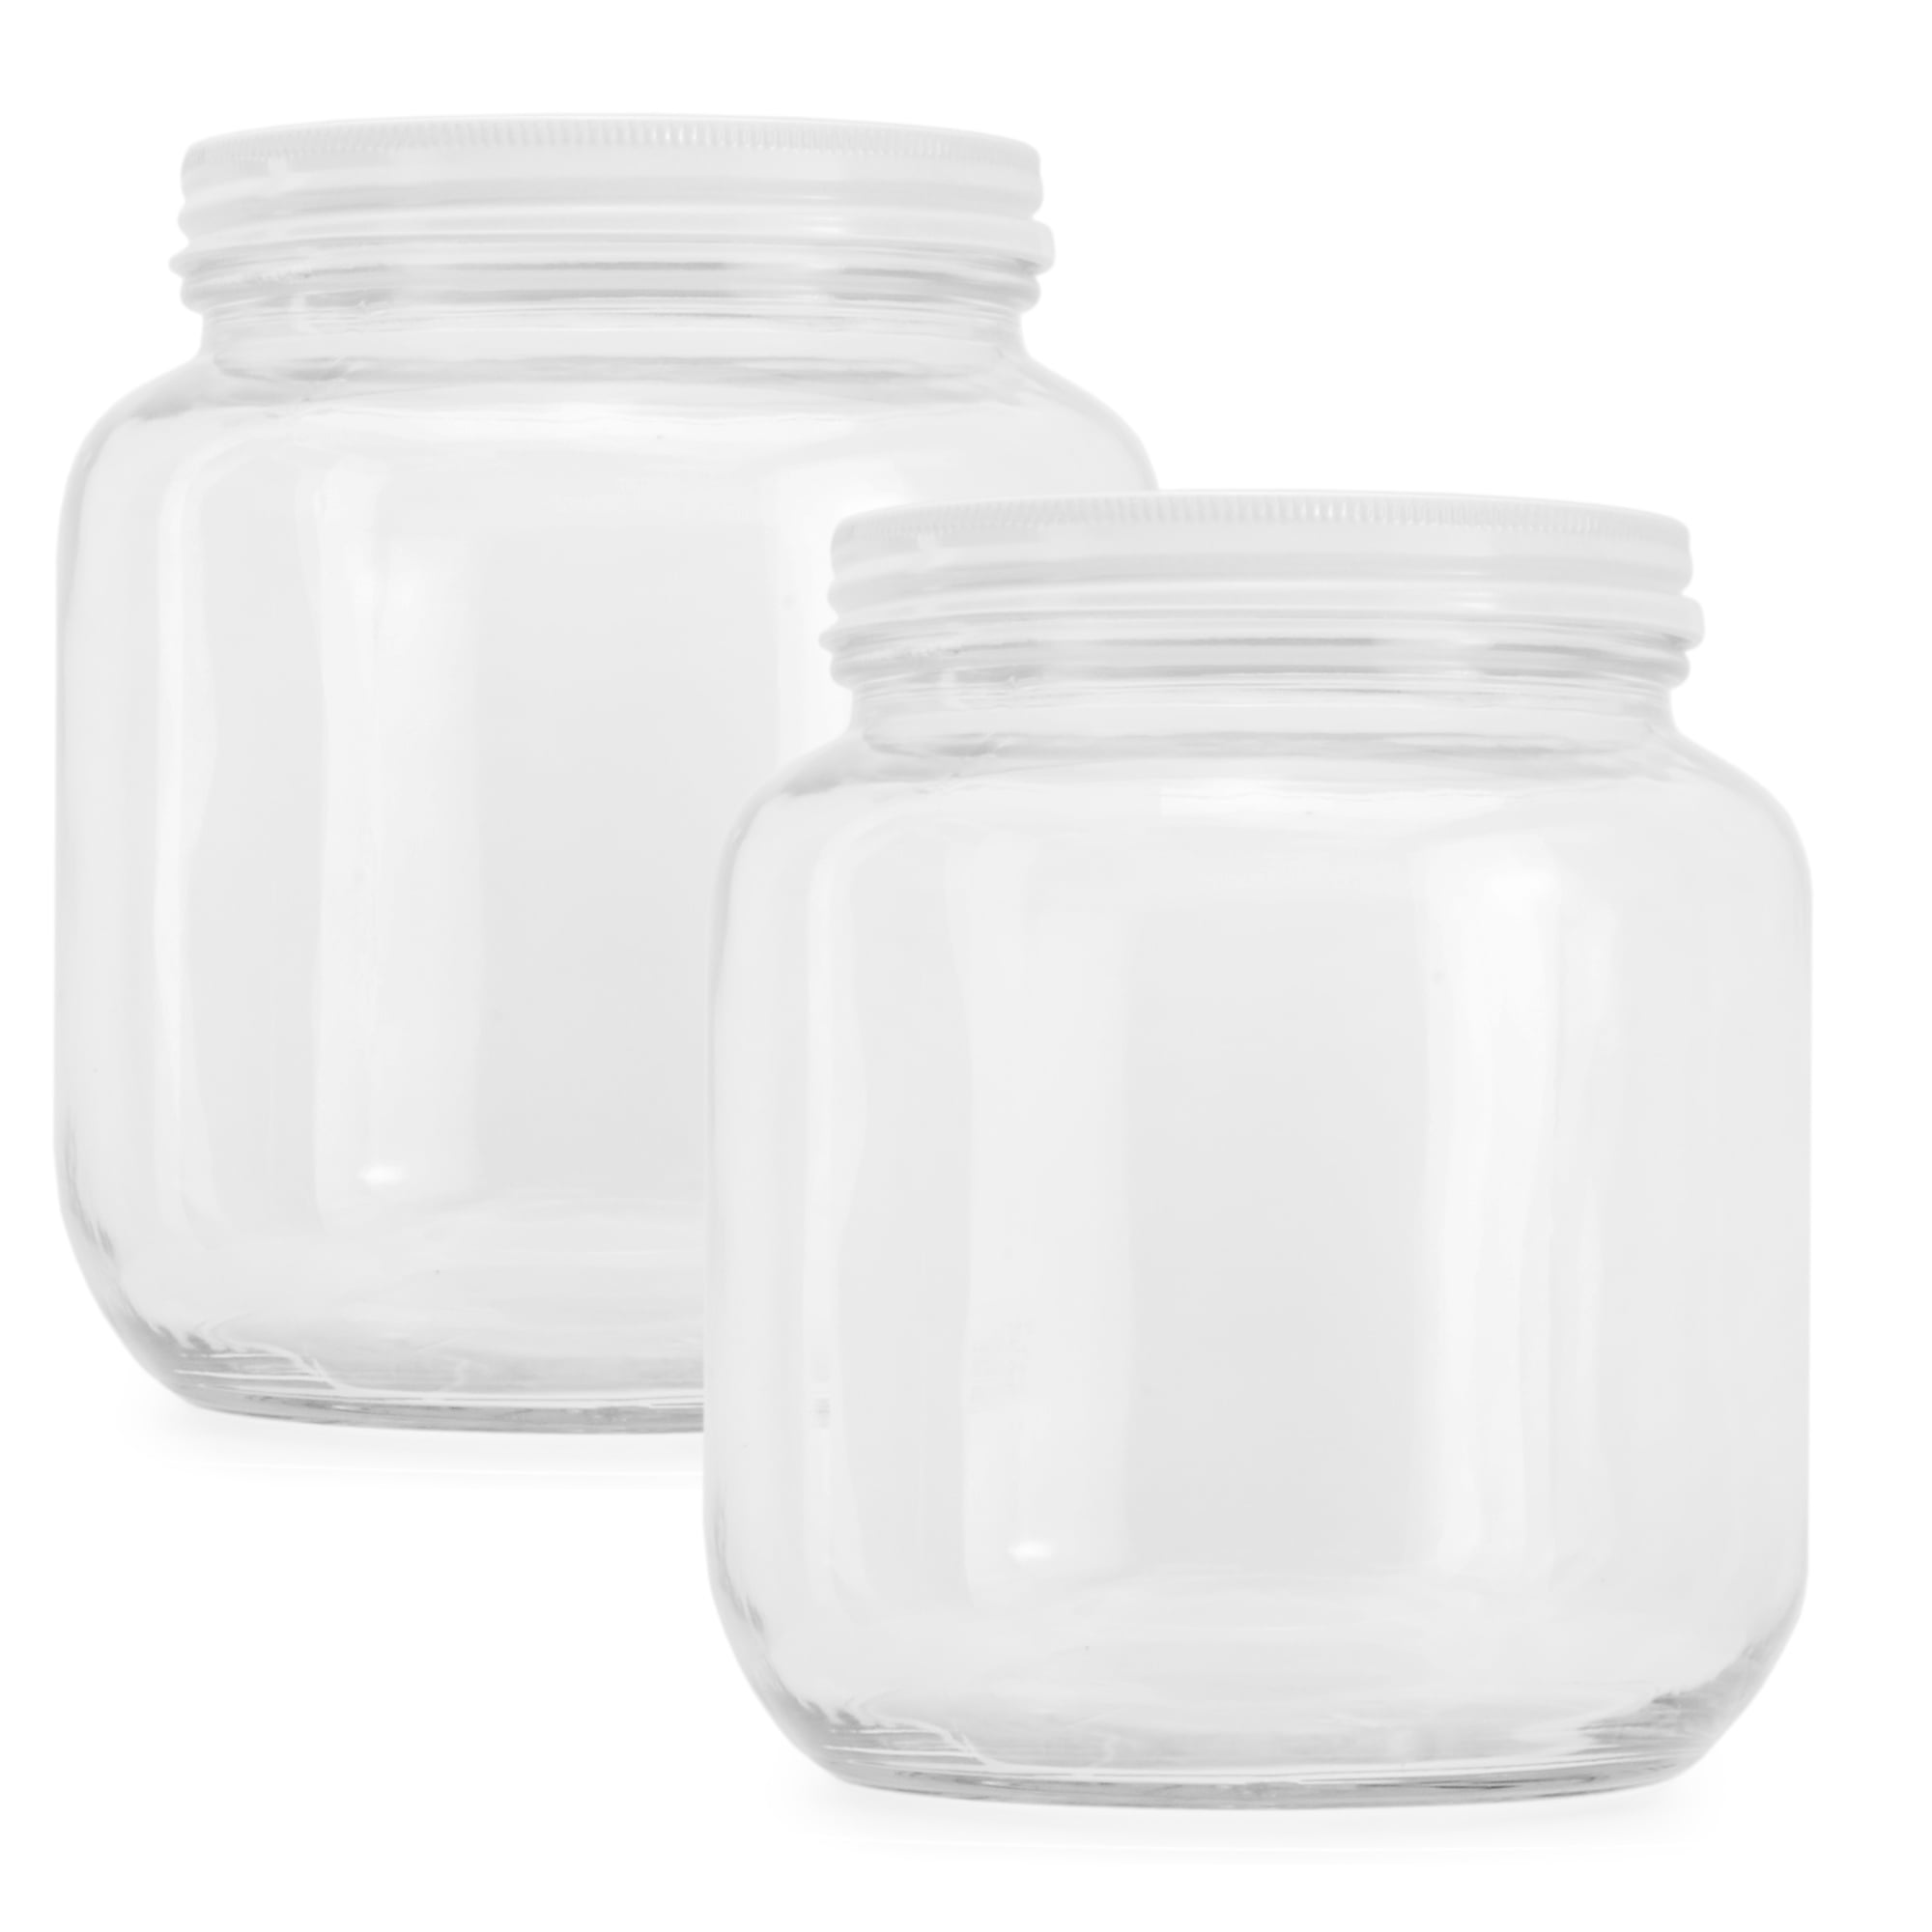 64oz Clear Wide-mouth Glass Jar, BPA free Food Grade w/ Metal Lid (Half  Gallon); 2 Quart Jar to Make Greek Yogurt/Kefir or Pickles